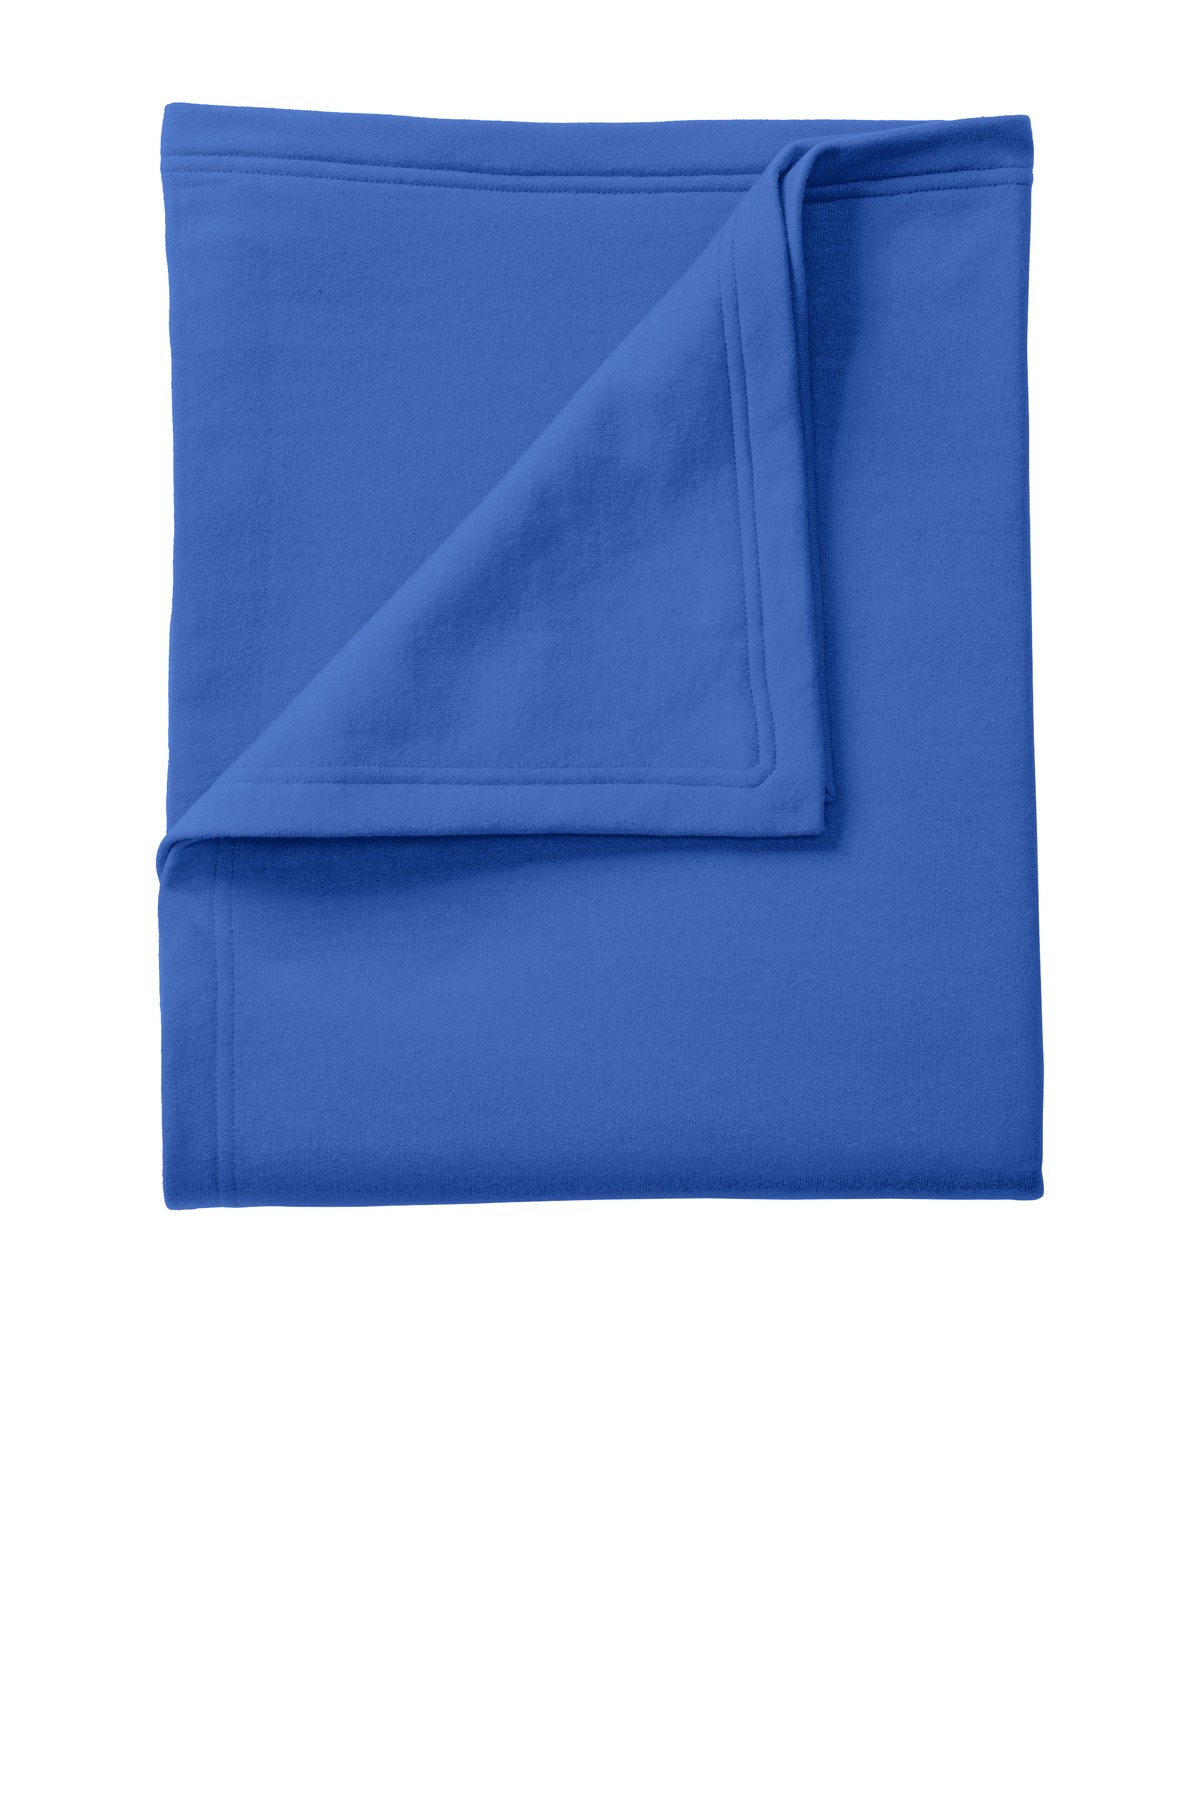 Port & Company Core Fleece Sweatshirt Blanket. BP78